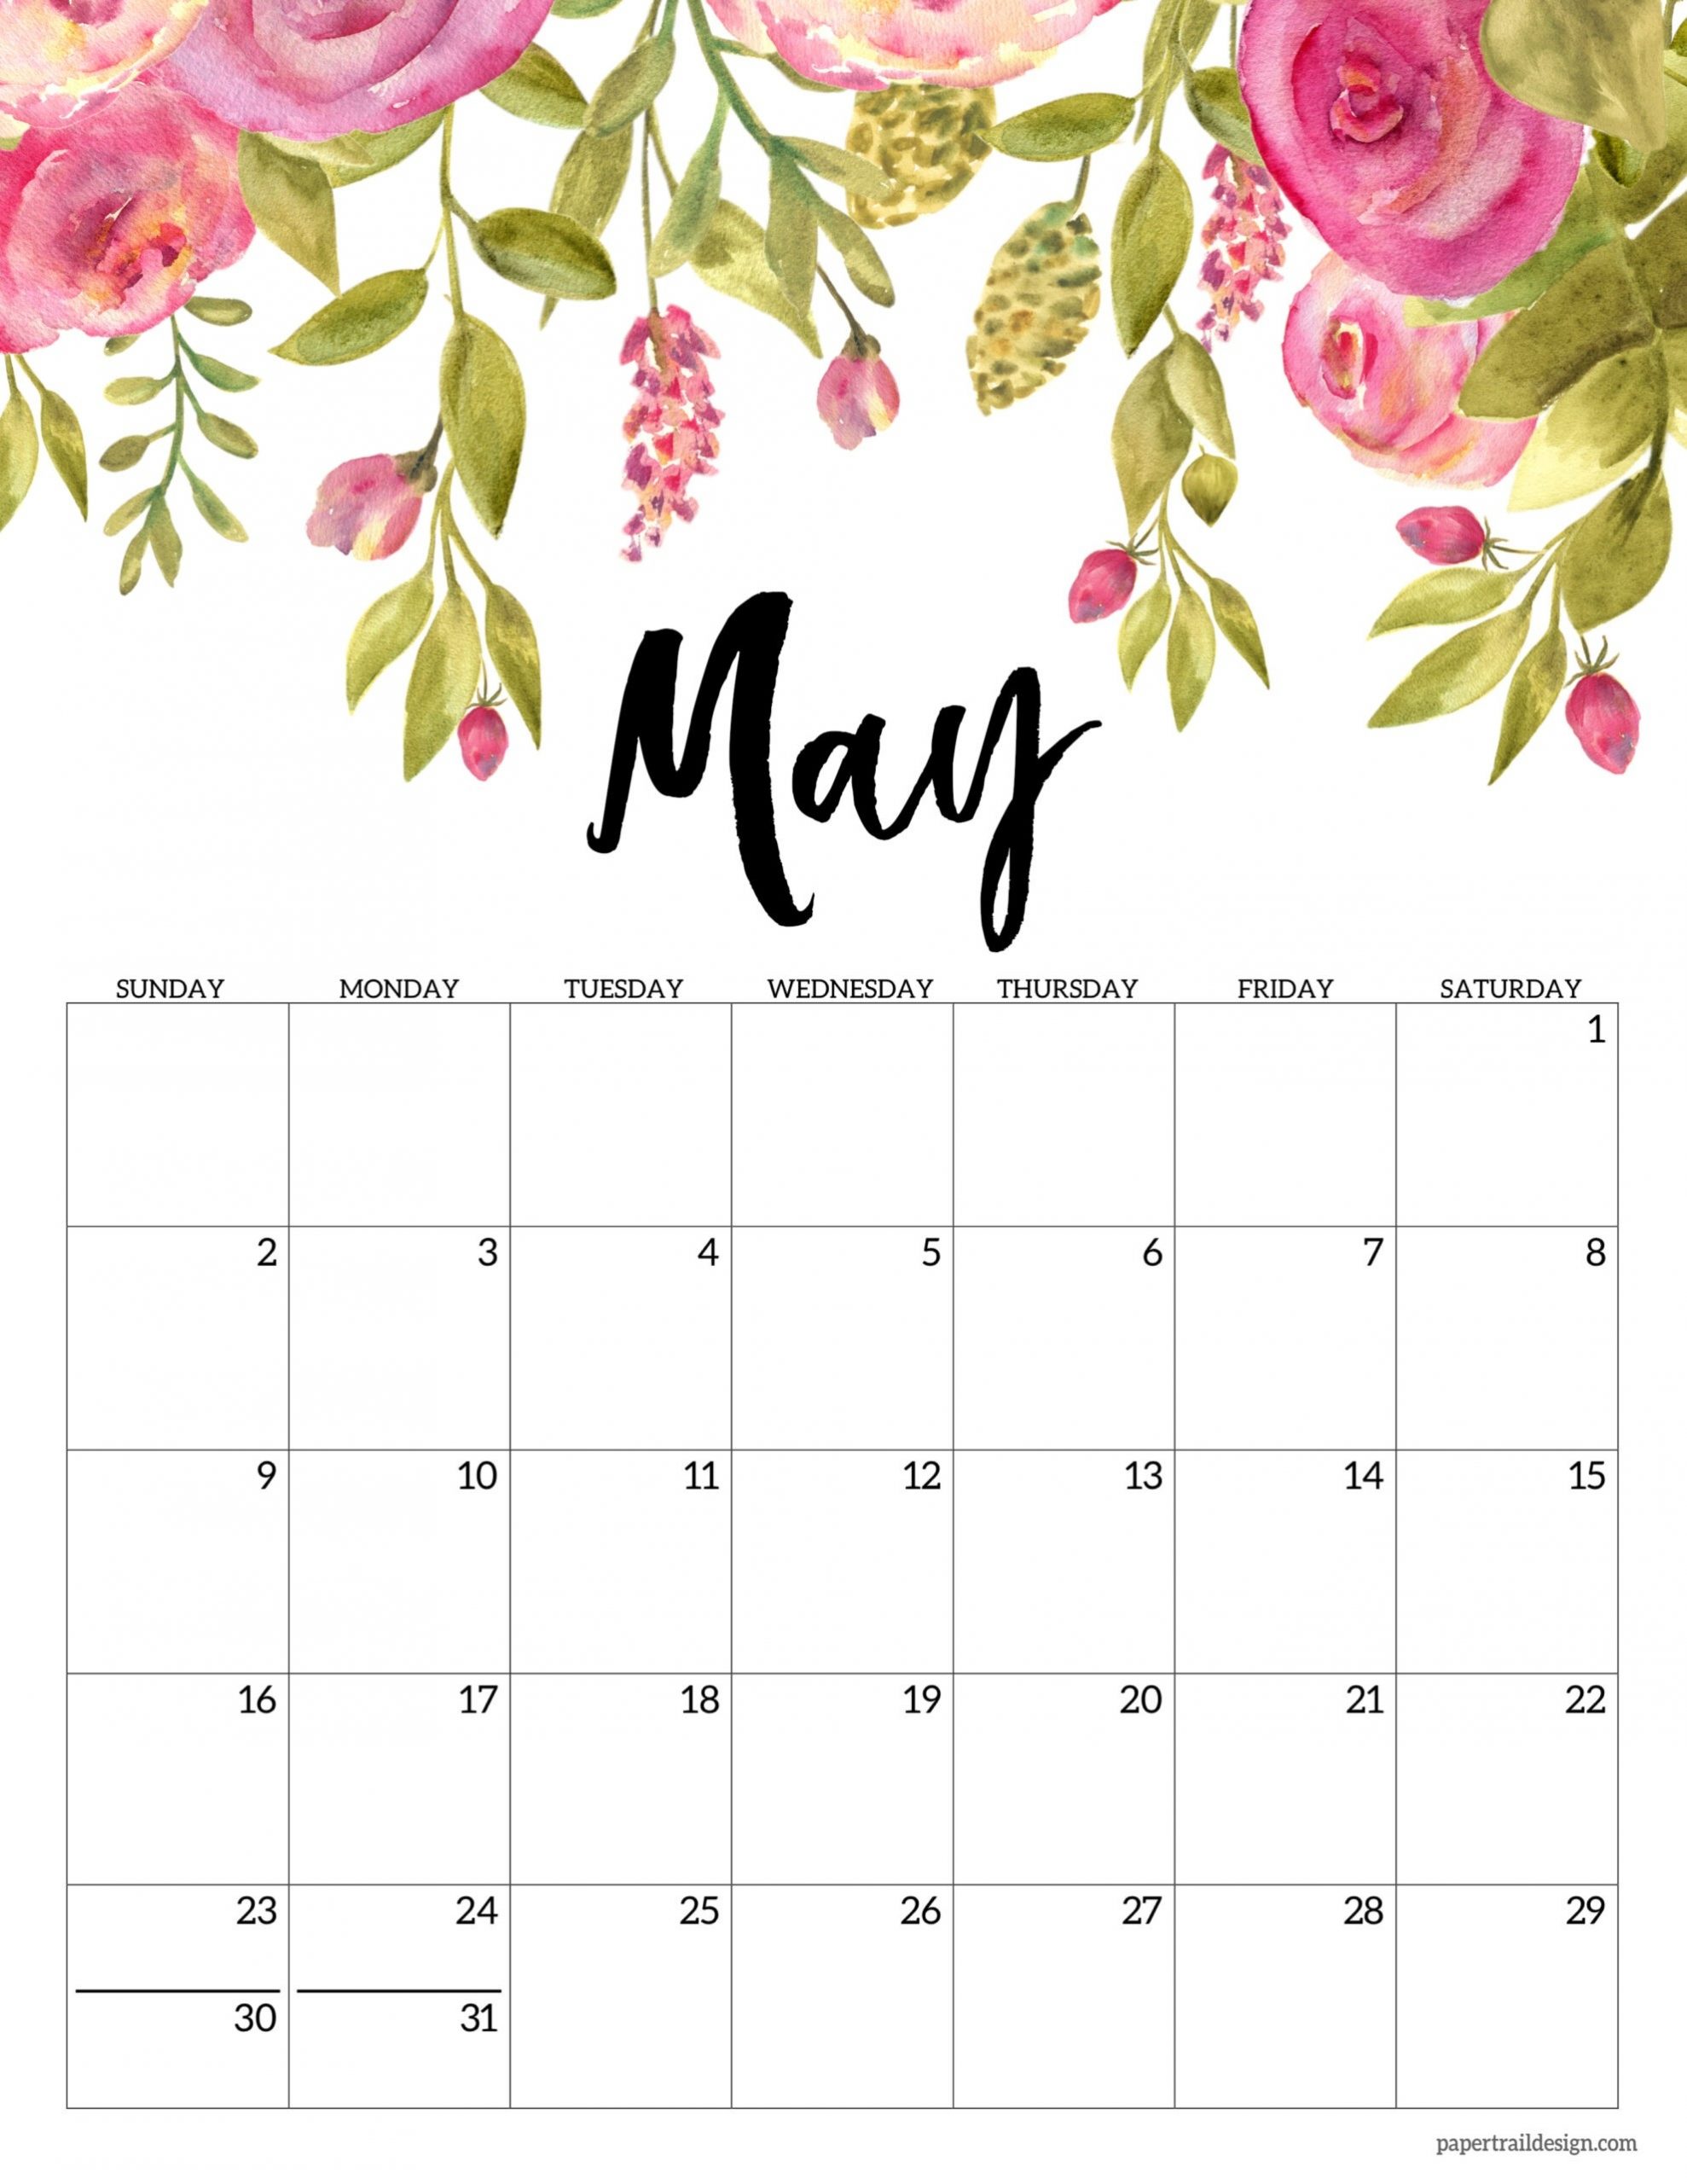 Free Printable 2021 Floral Calendar | Paper Trail Design  Girly Monthly Calendar Printable 2021